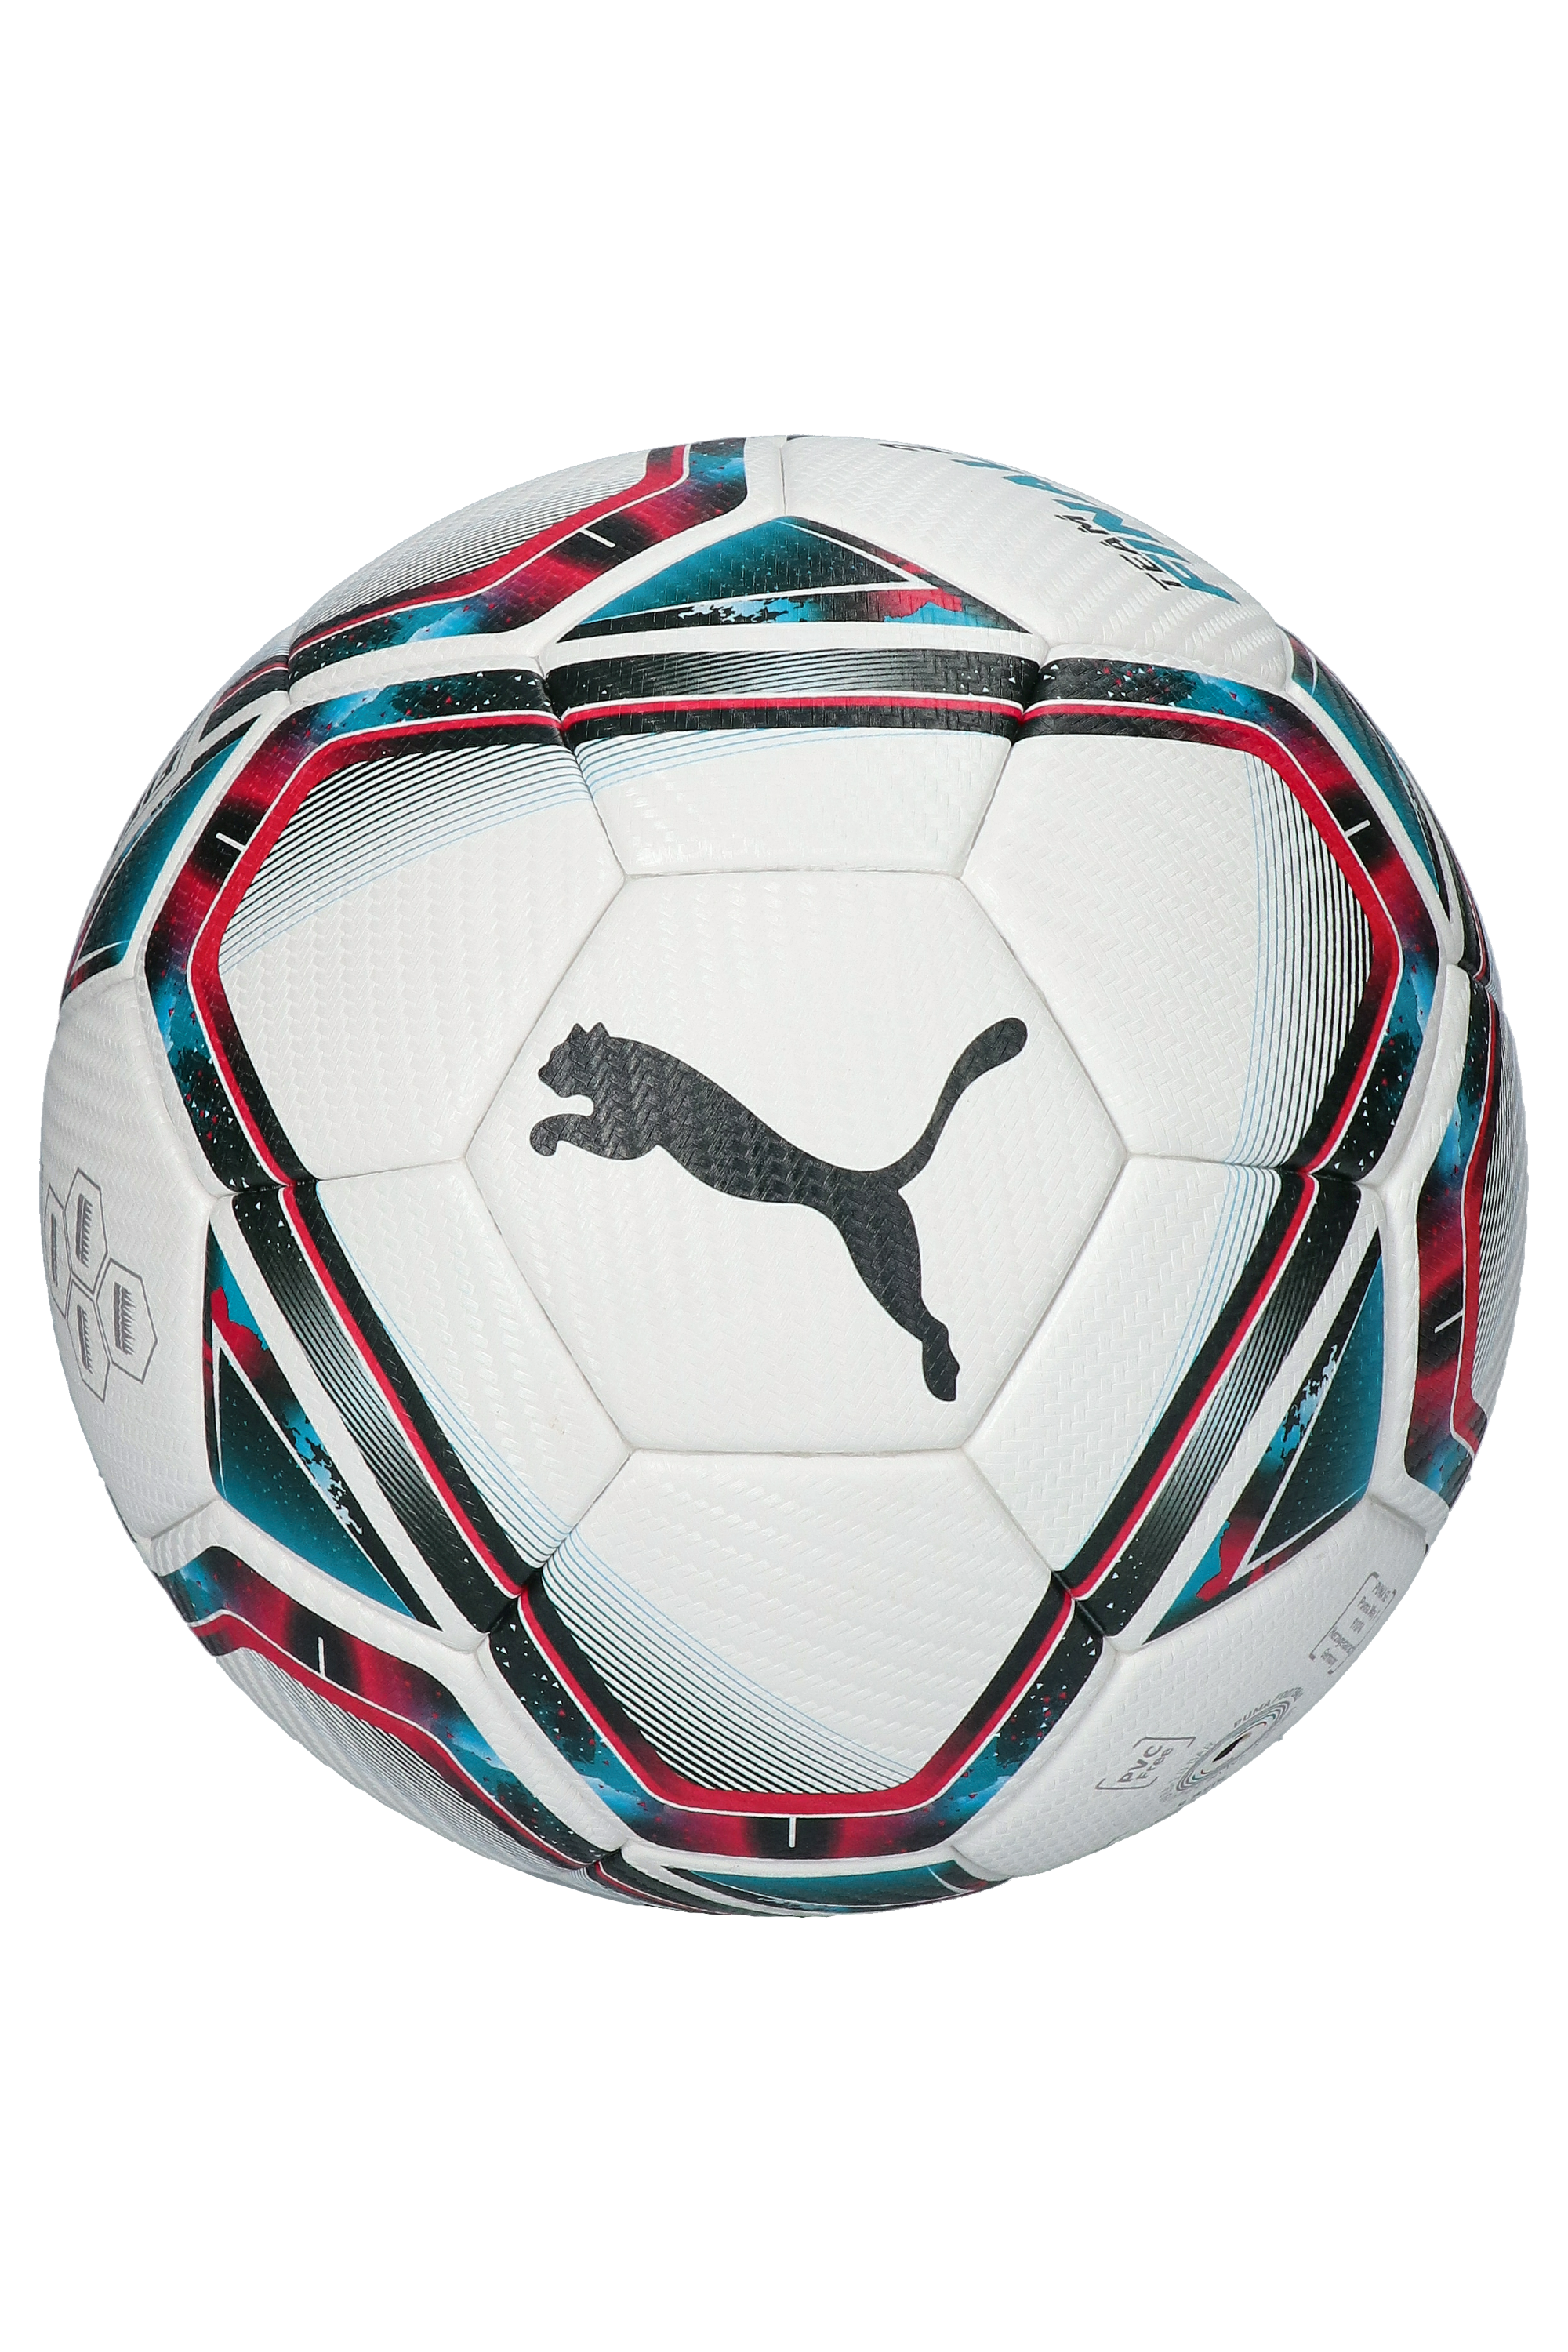 Ball Puma TeamFinal 21.2 FIFA Quality Pro size 5 | R-GOL.com - Football  boots & equipment